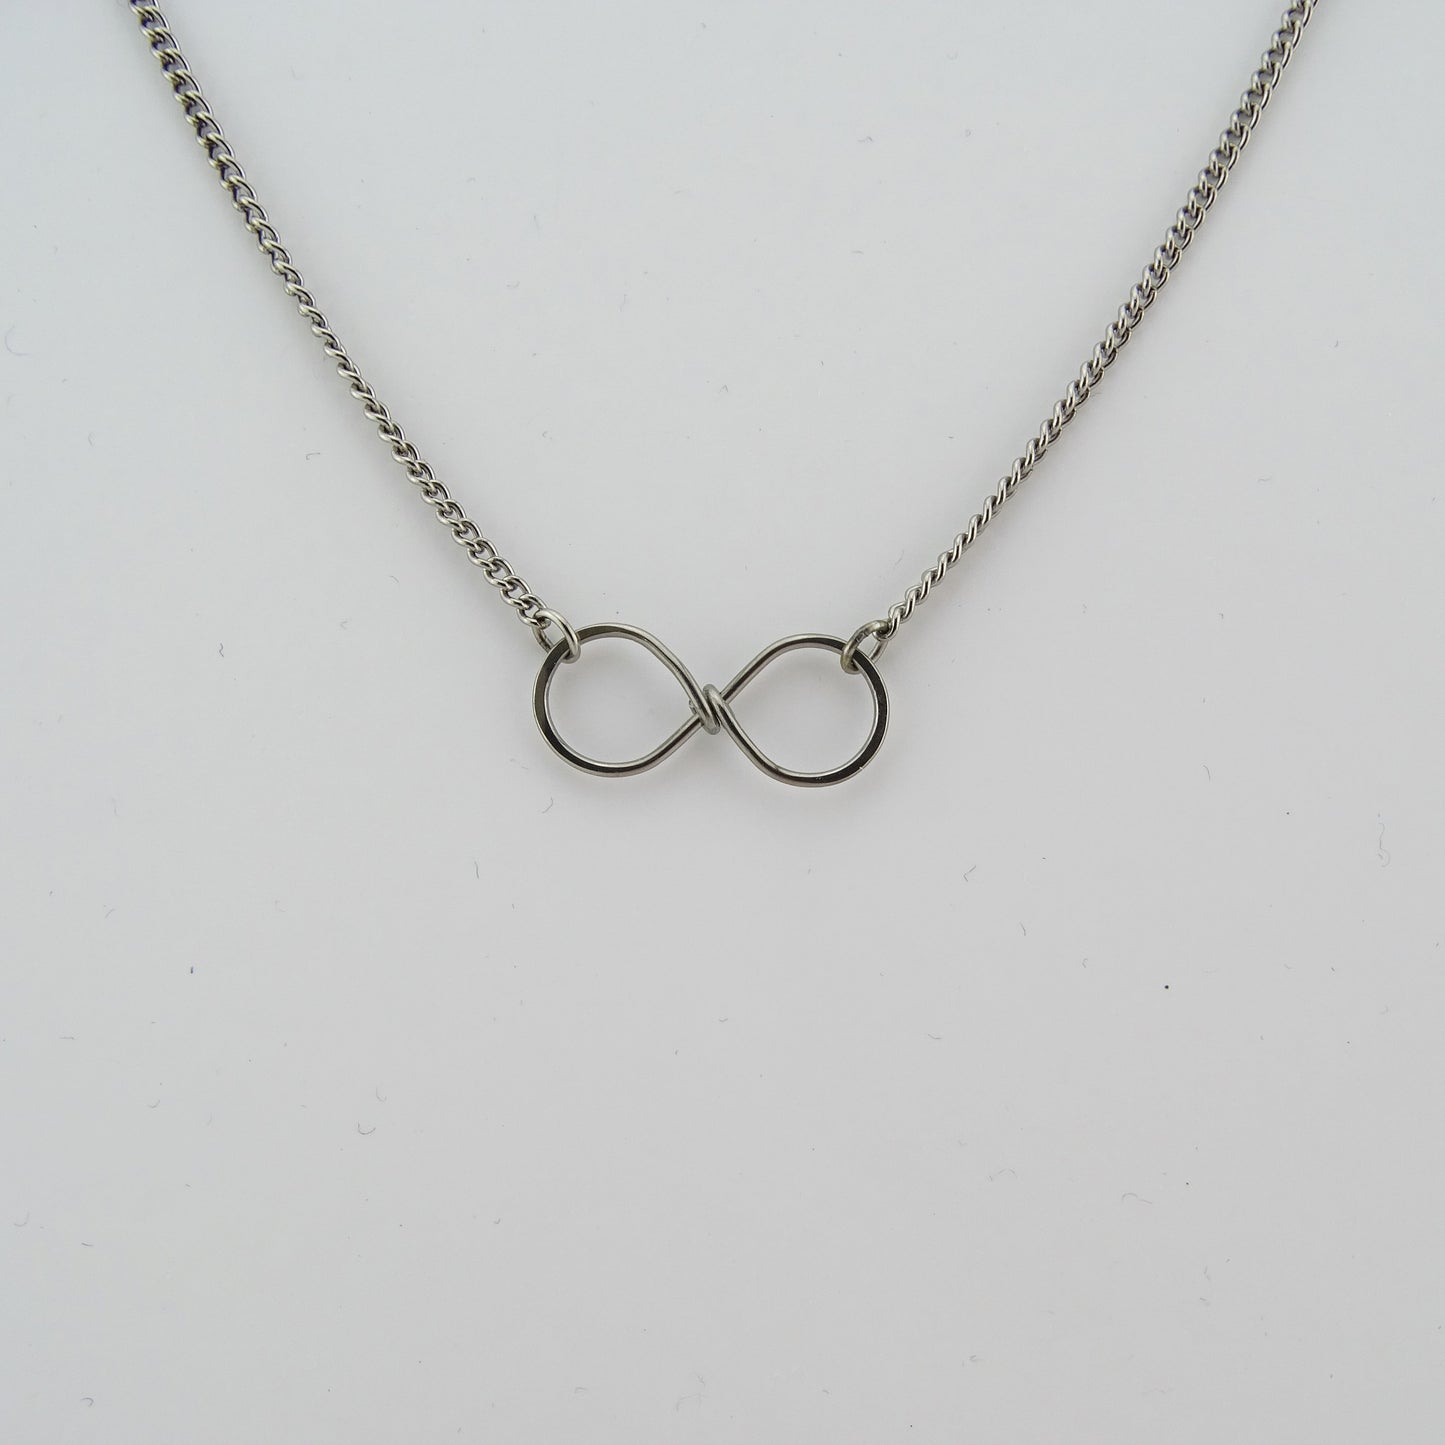 Infinity Charm Titanium Necklace for Sensitive Skin, Endless Love Symbol Niobium Necklace, Nickel Free Hypoallergenic Eternity Friendship